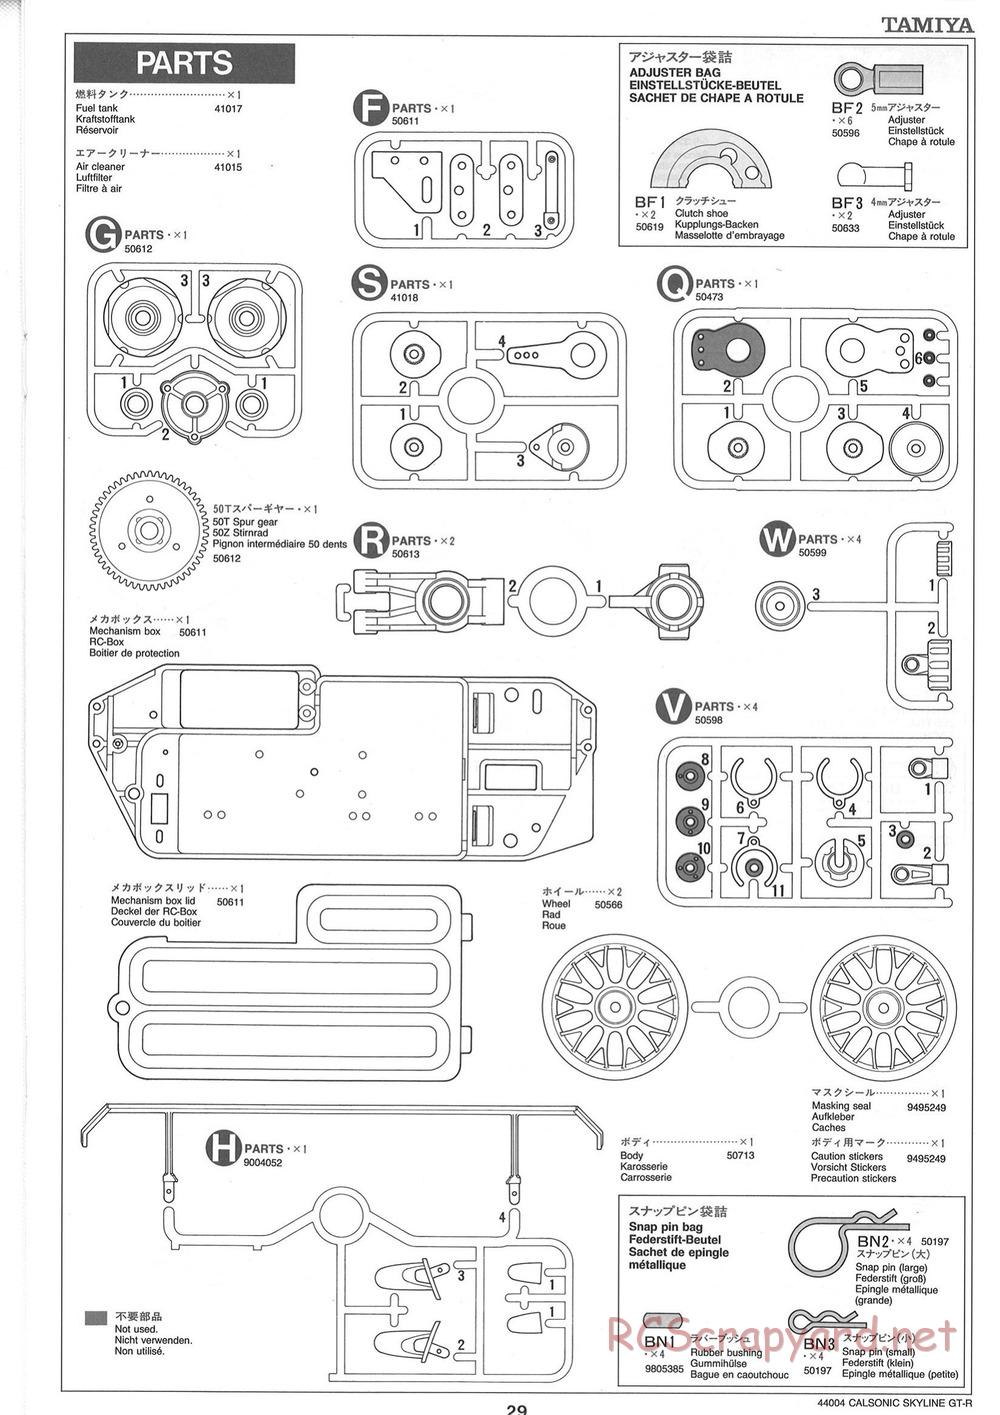 Tamiya - Calsonic GT-R - TGX Mk.1 Chassis - Manual - Page 29